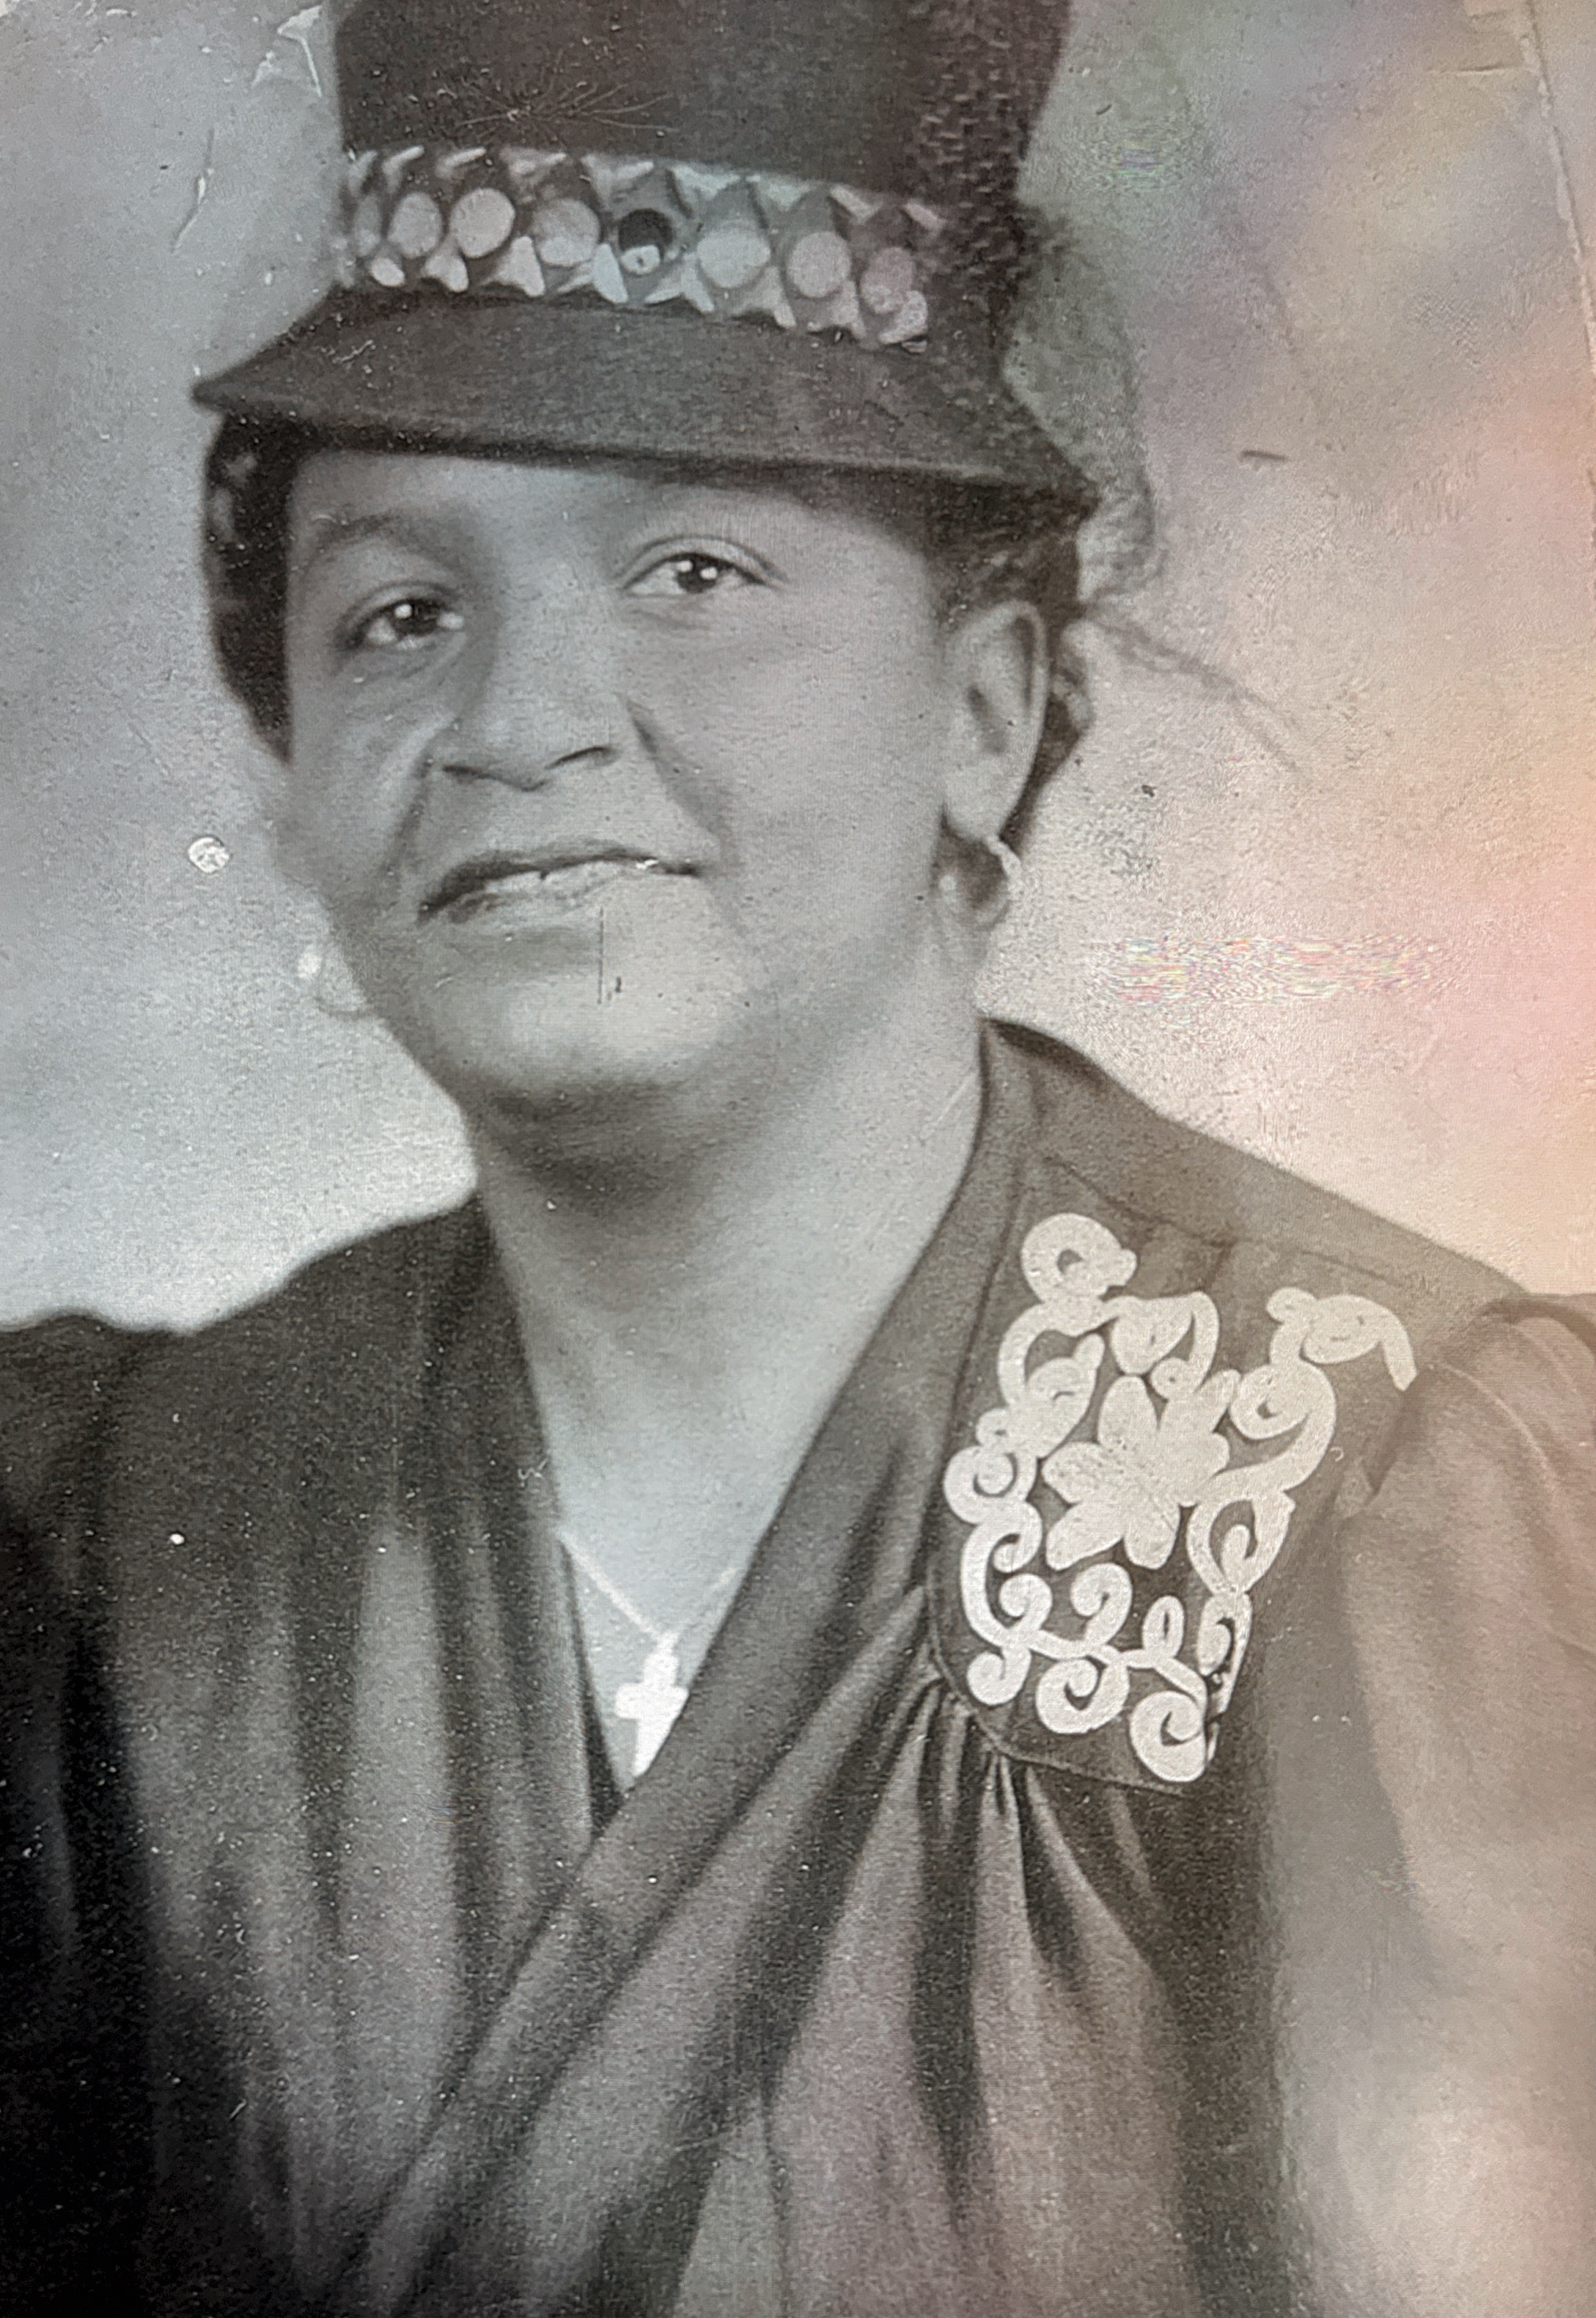 Grandma - maybe late 1920s or early 1930s